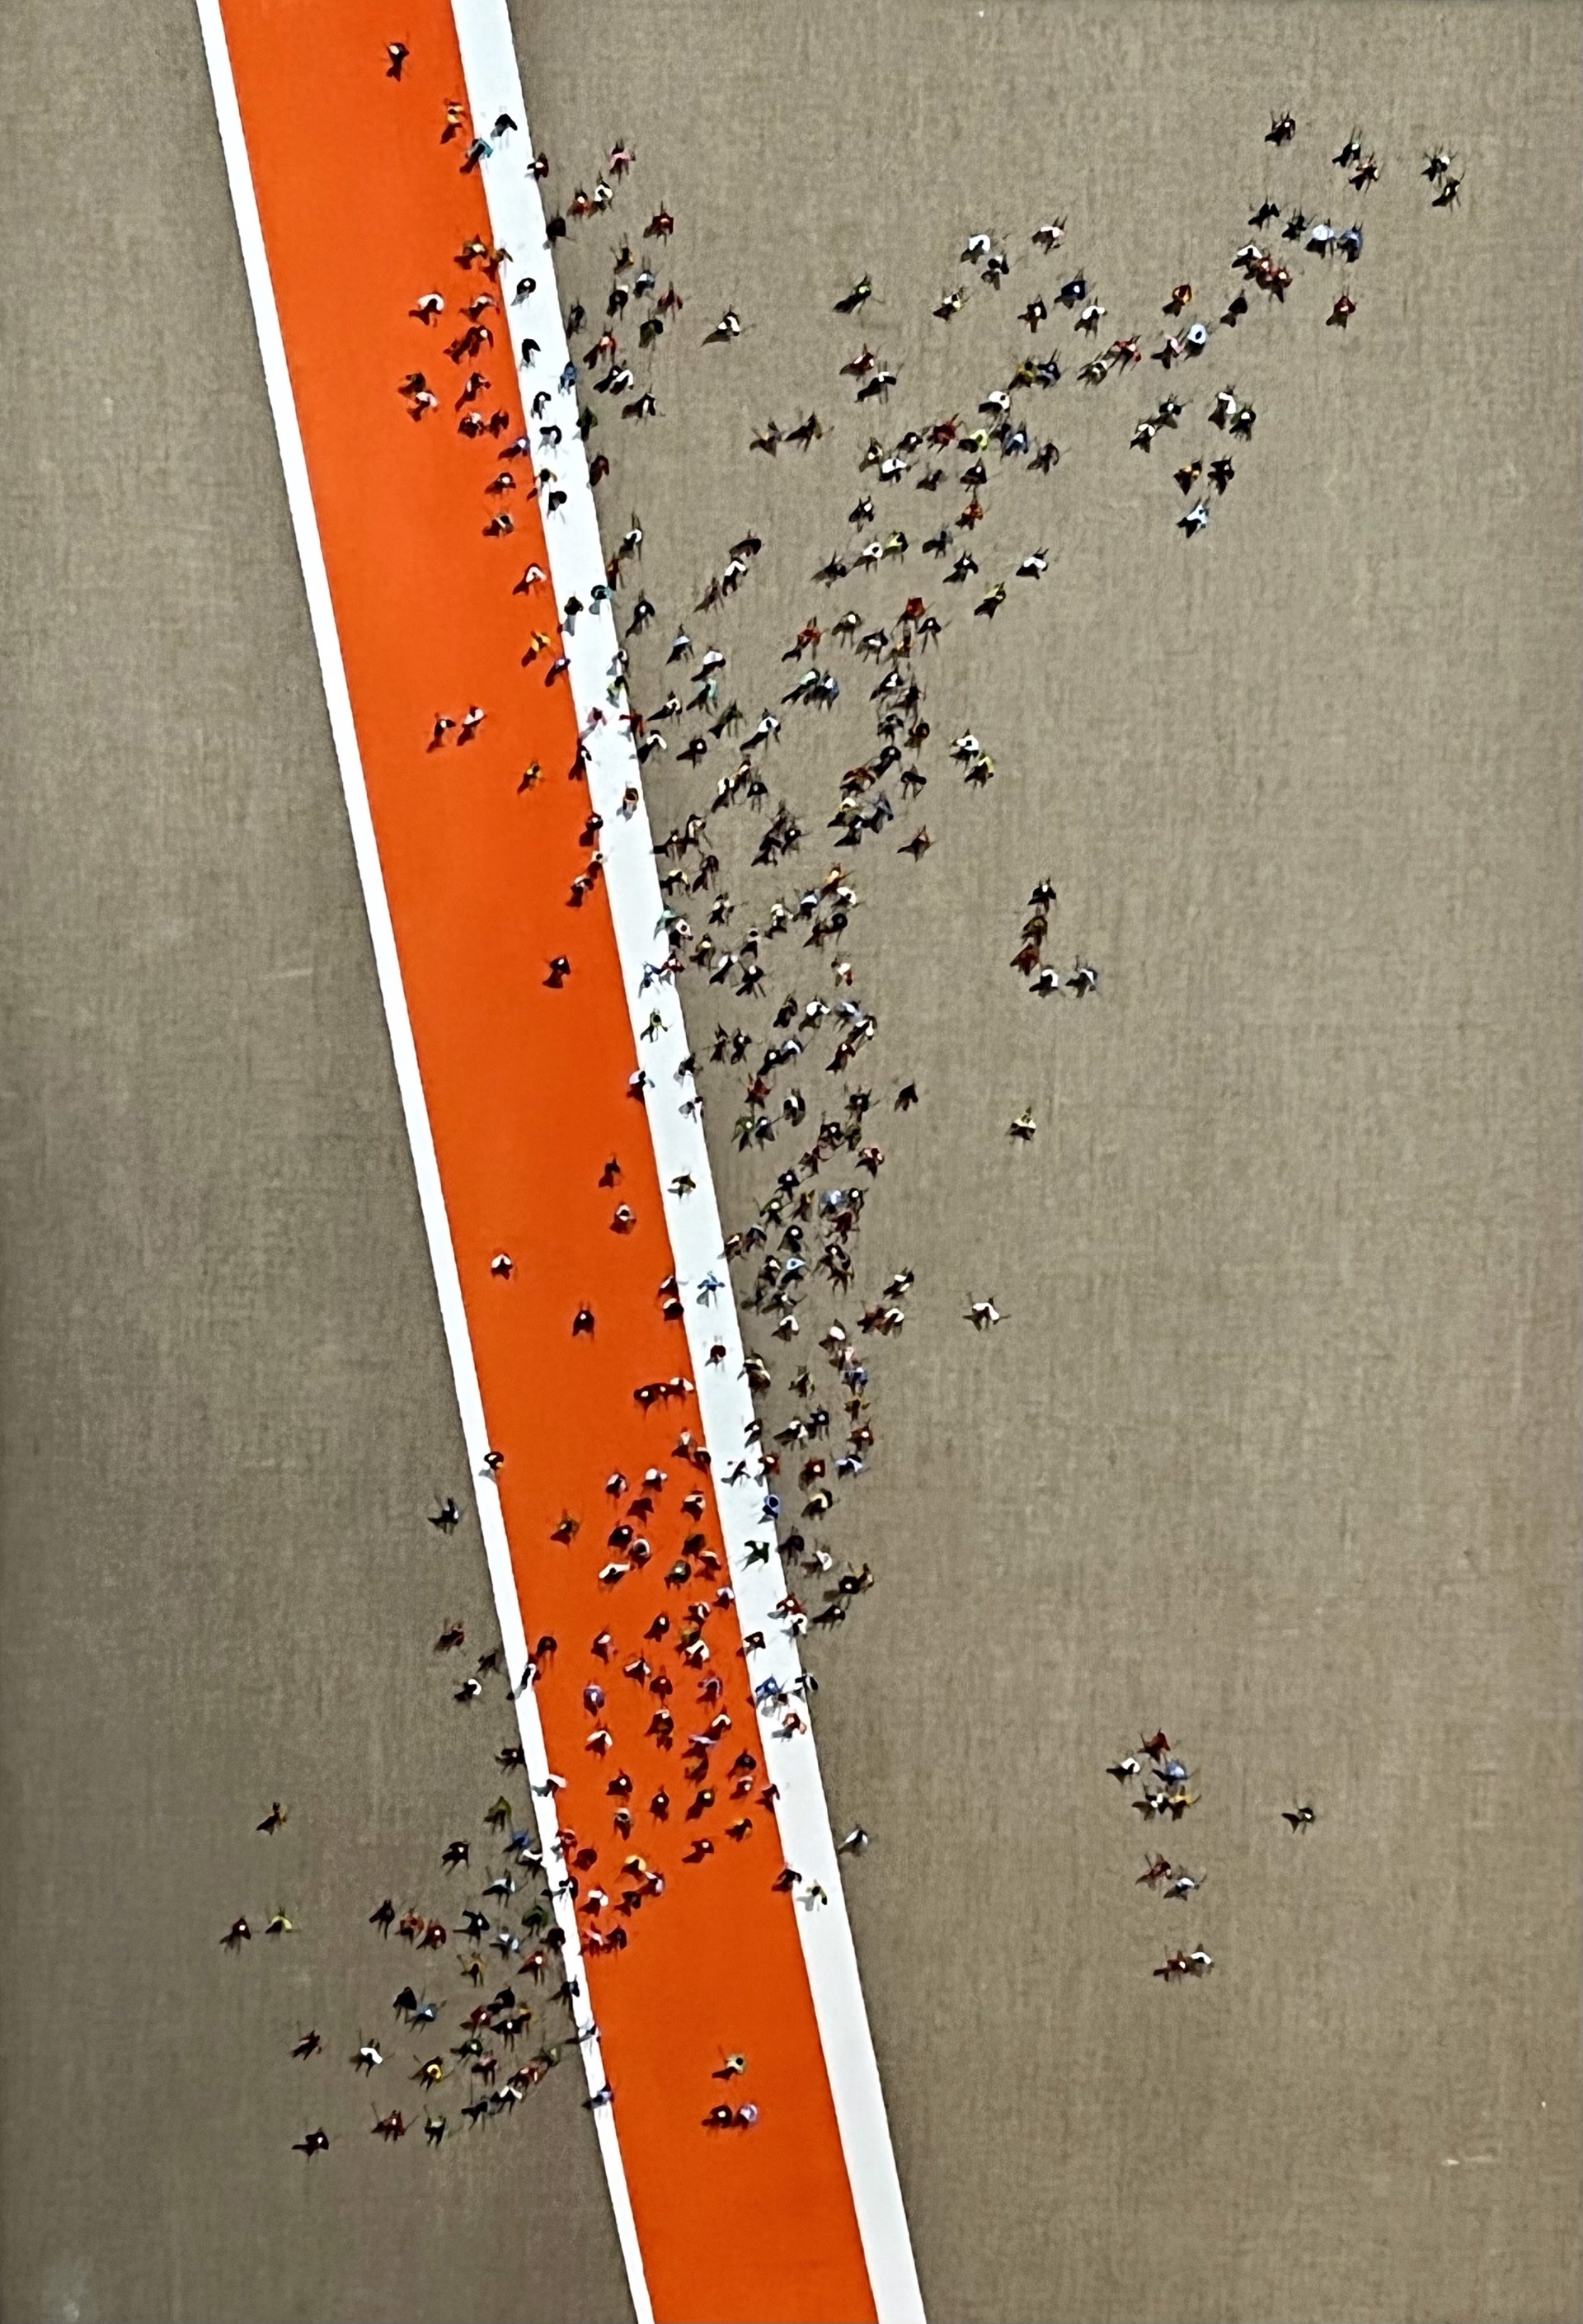 Crossing The Orange Line by Gloria Estefanell